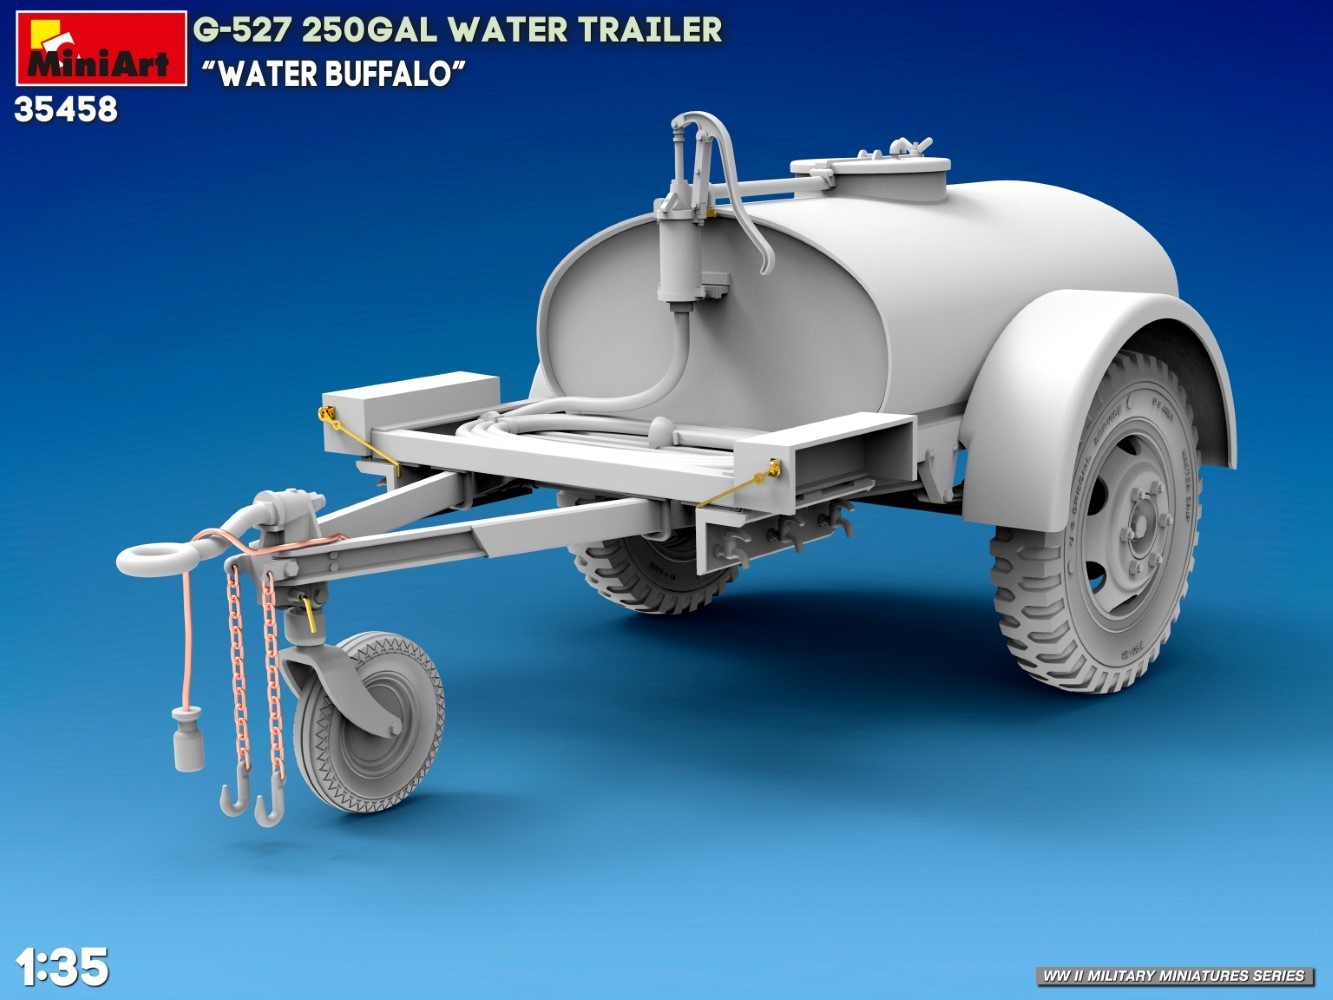 MiniArt G-527 250GAL Water Trailer “Water Buffalo” CAD-1